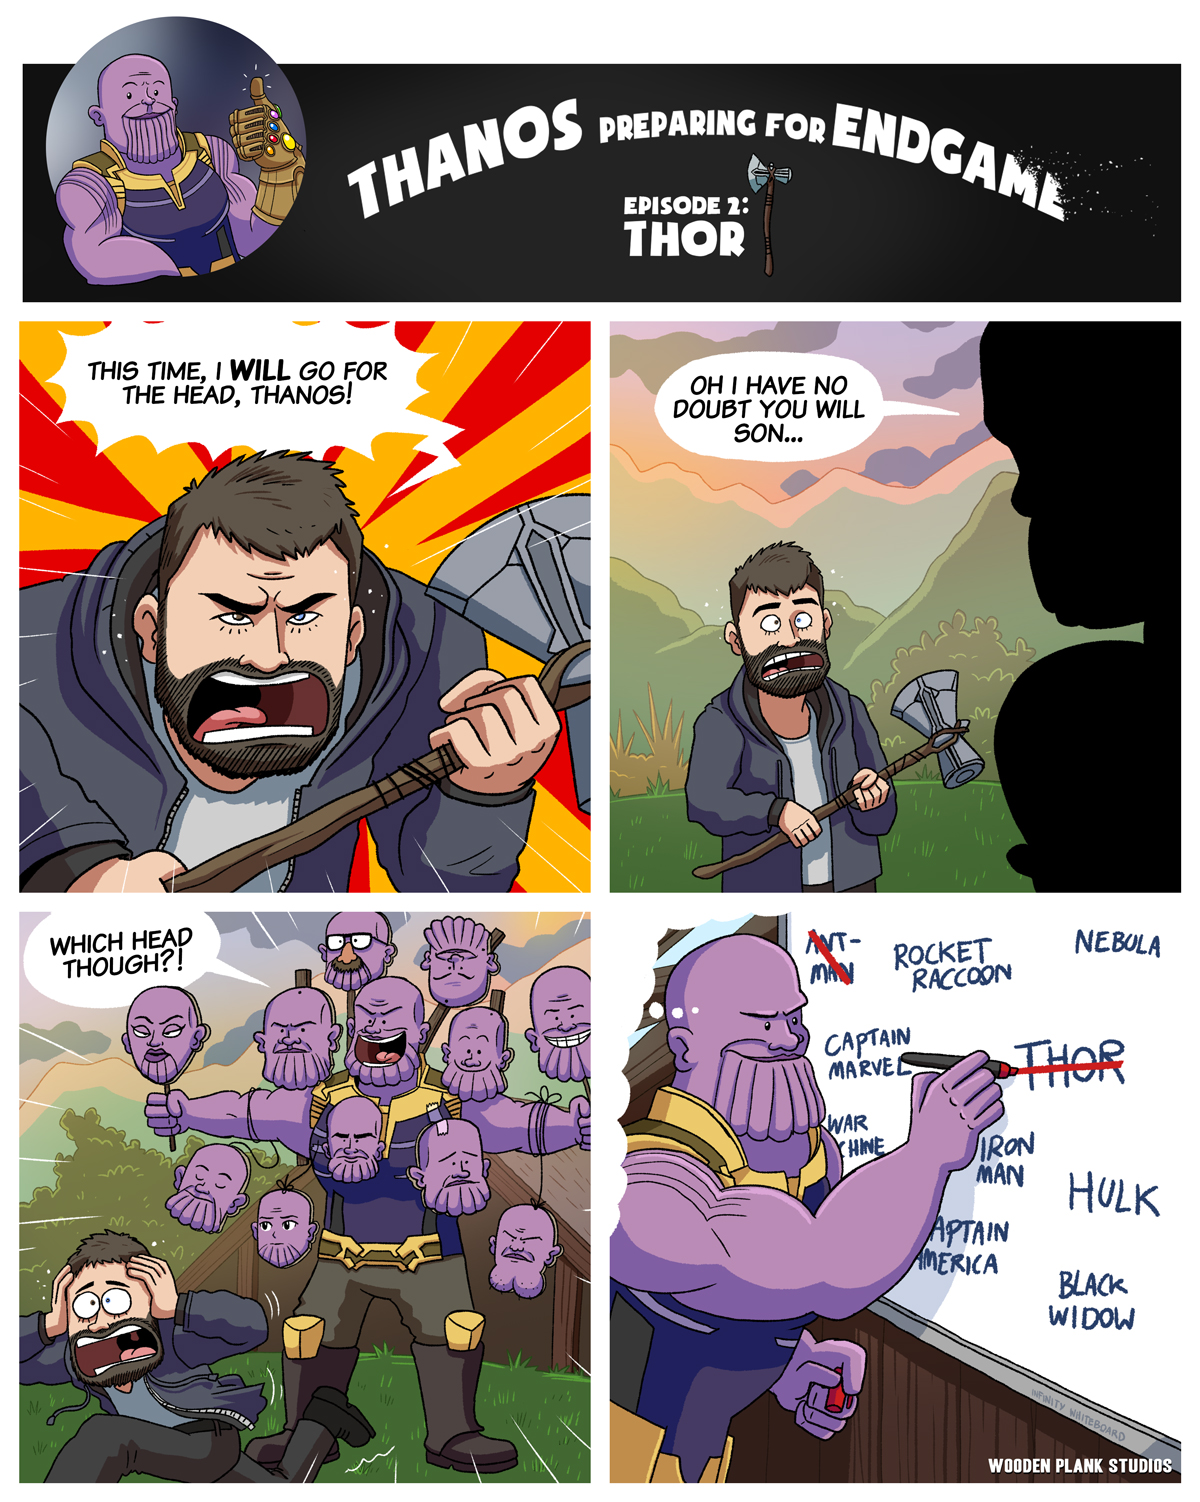 Avengers Endgame Comic Art Image Wallpapers